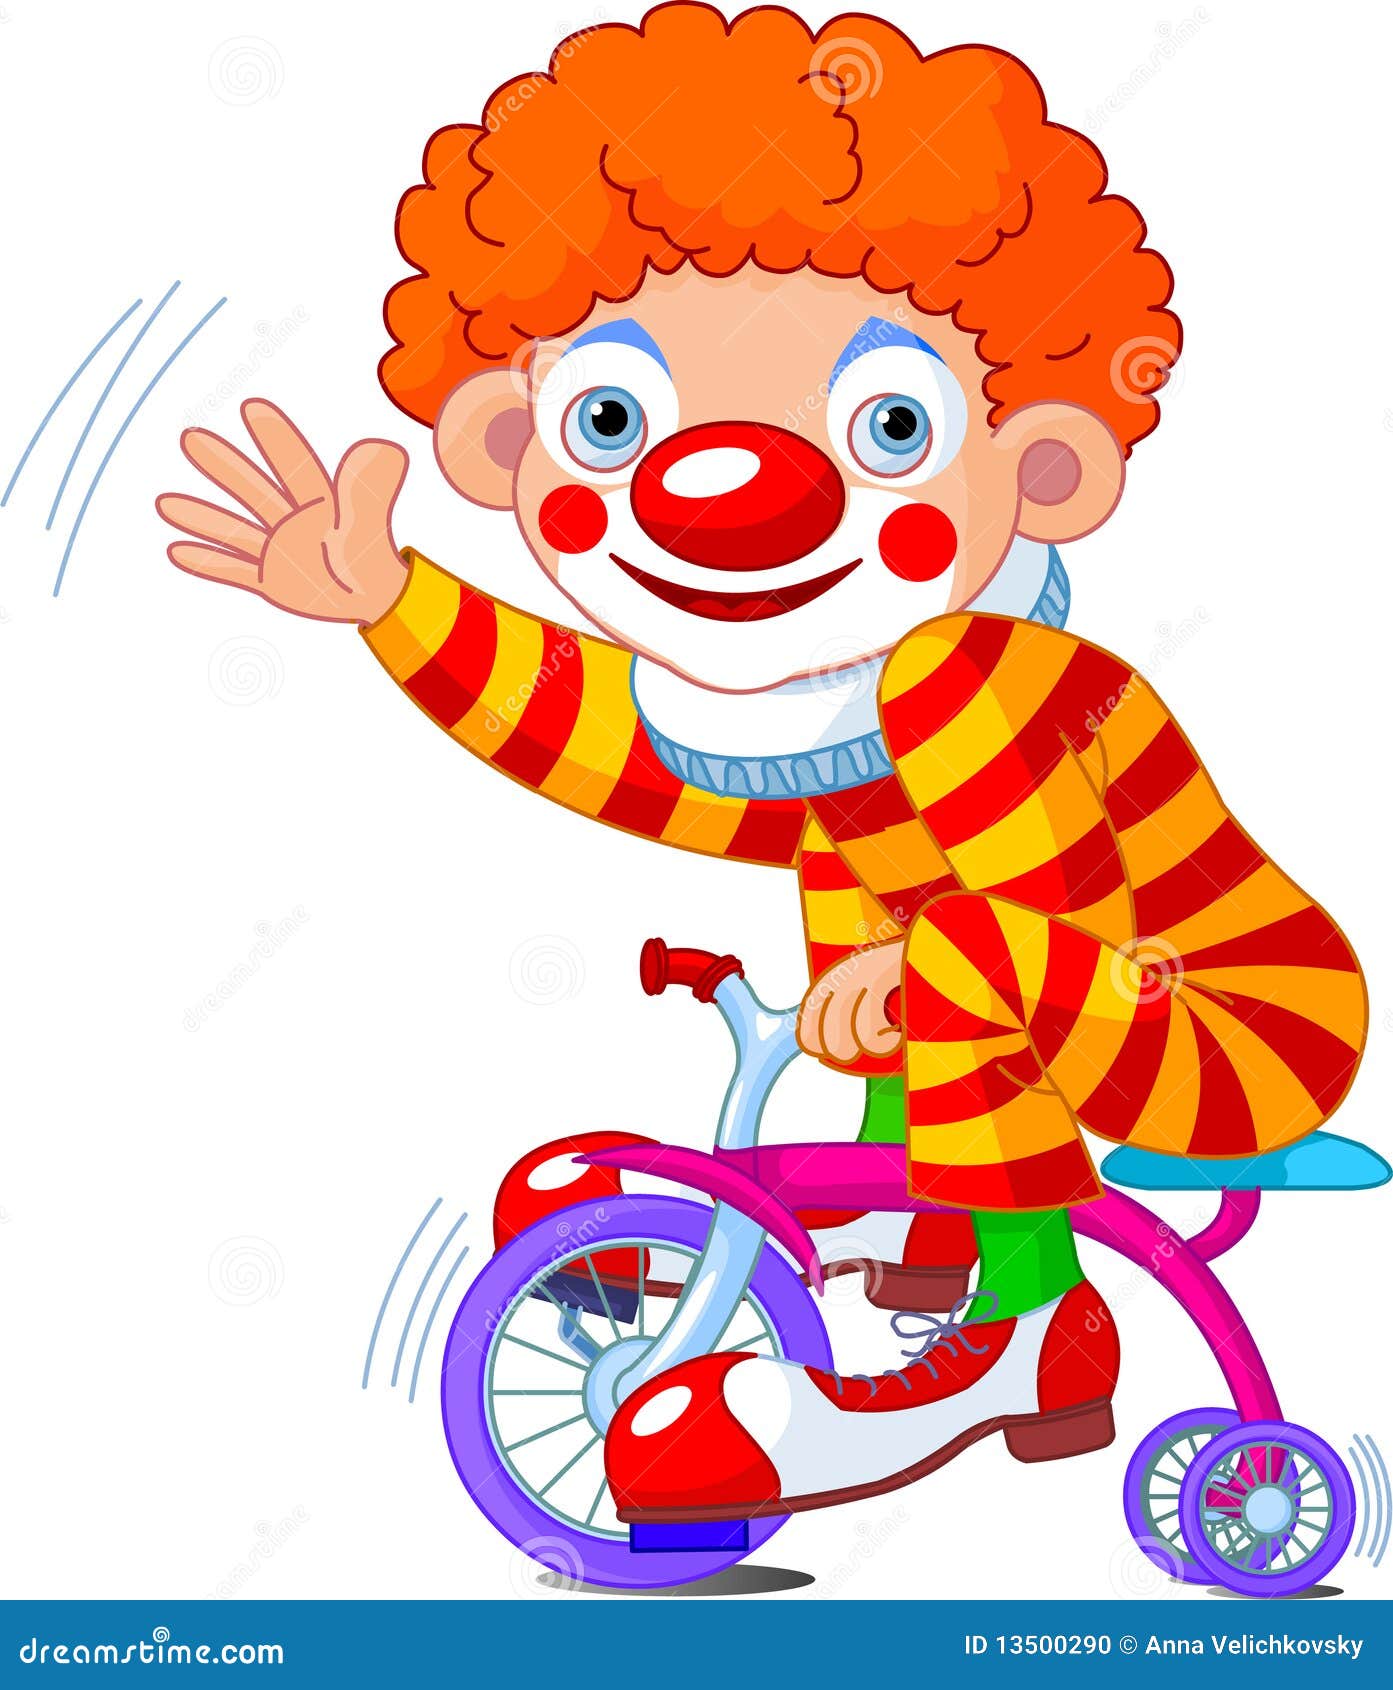 clown on three-wheeled bicycle